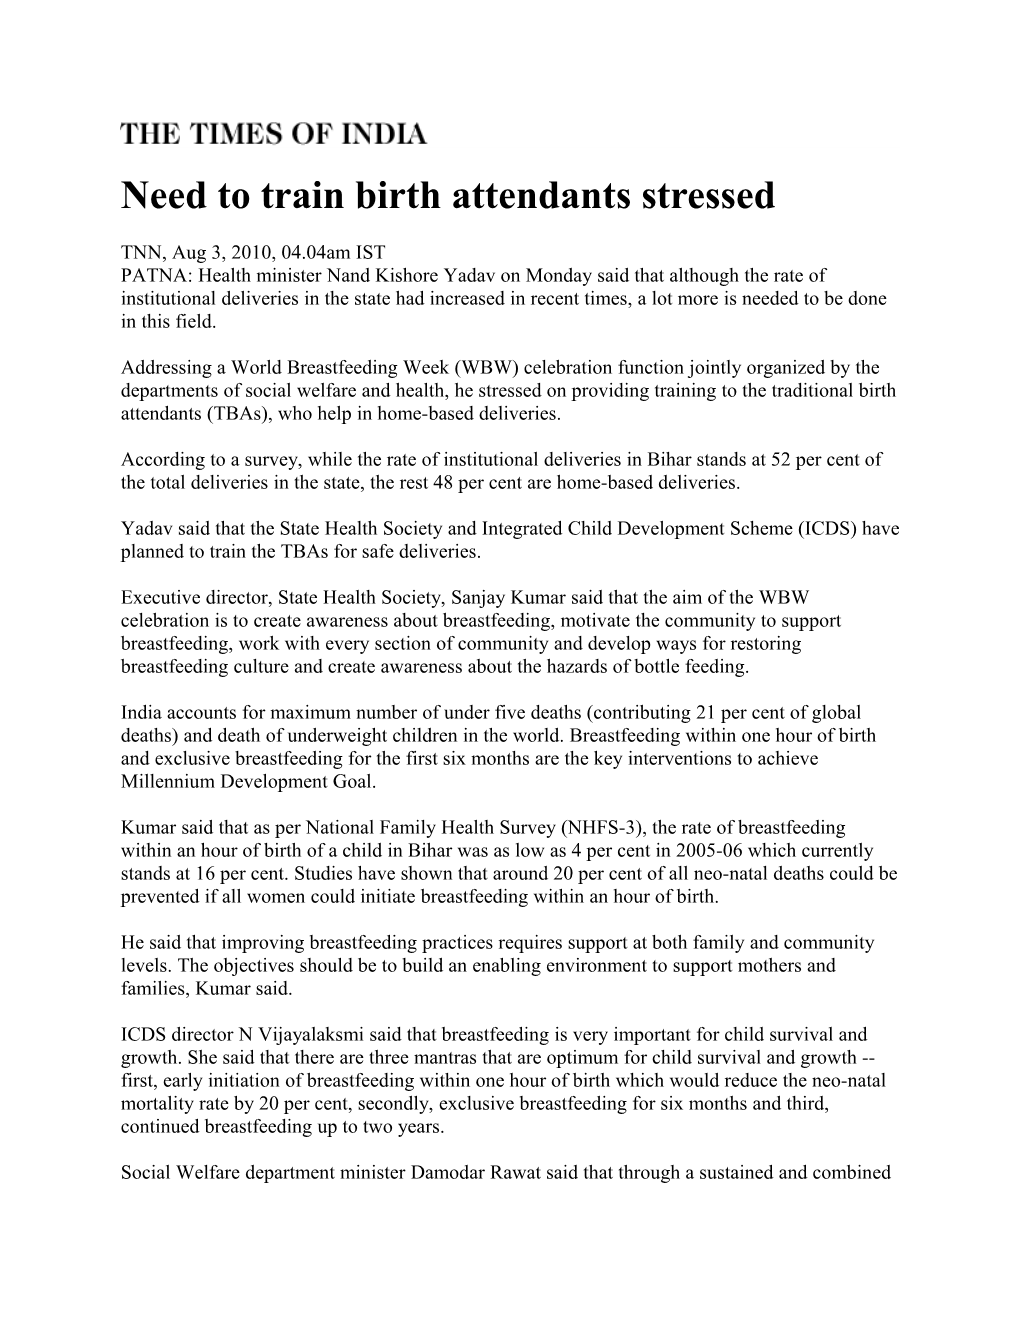 Need to Train Birth Attendants Stressed